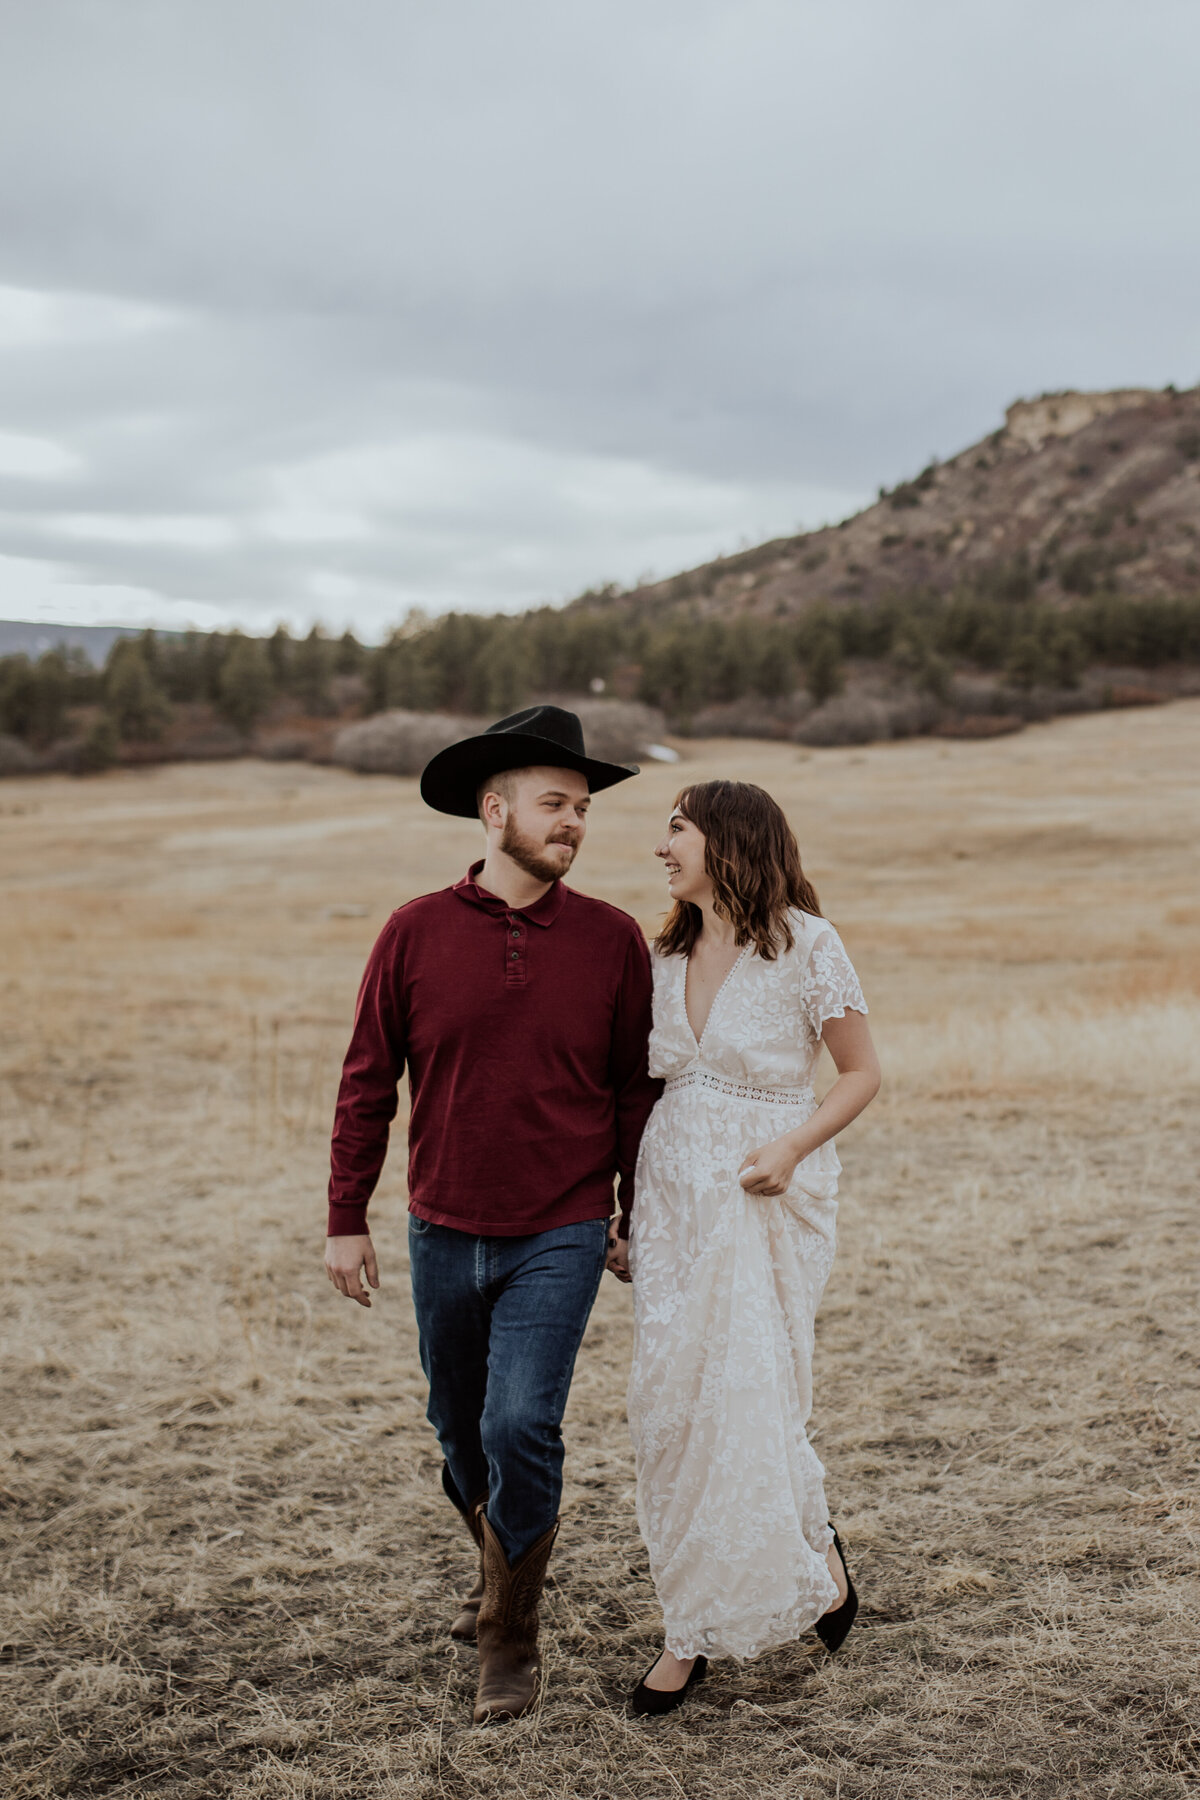 Best Colorado Springs Couples Photographers - Emily Jo Photo8